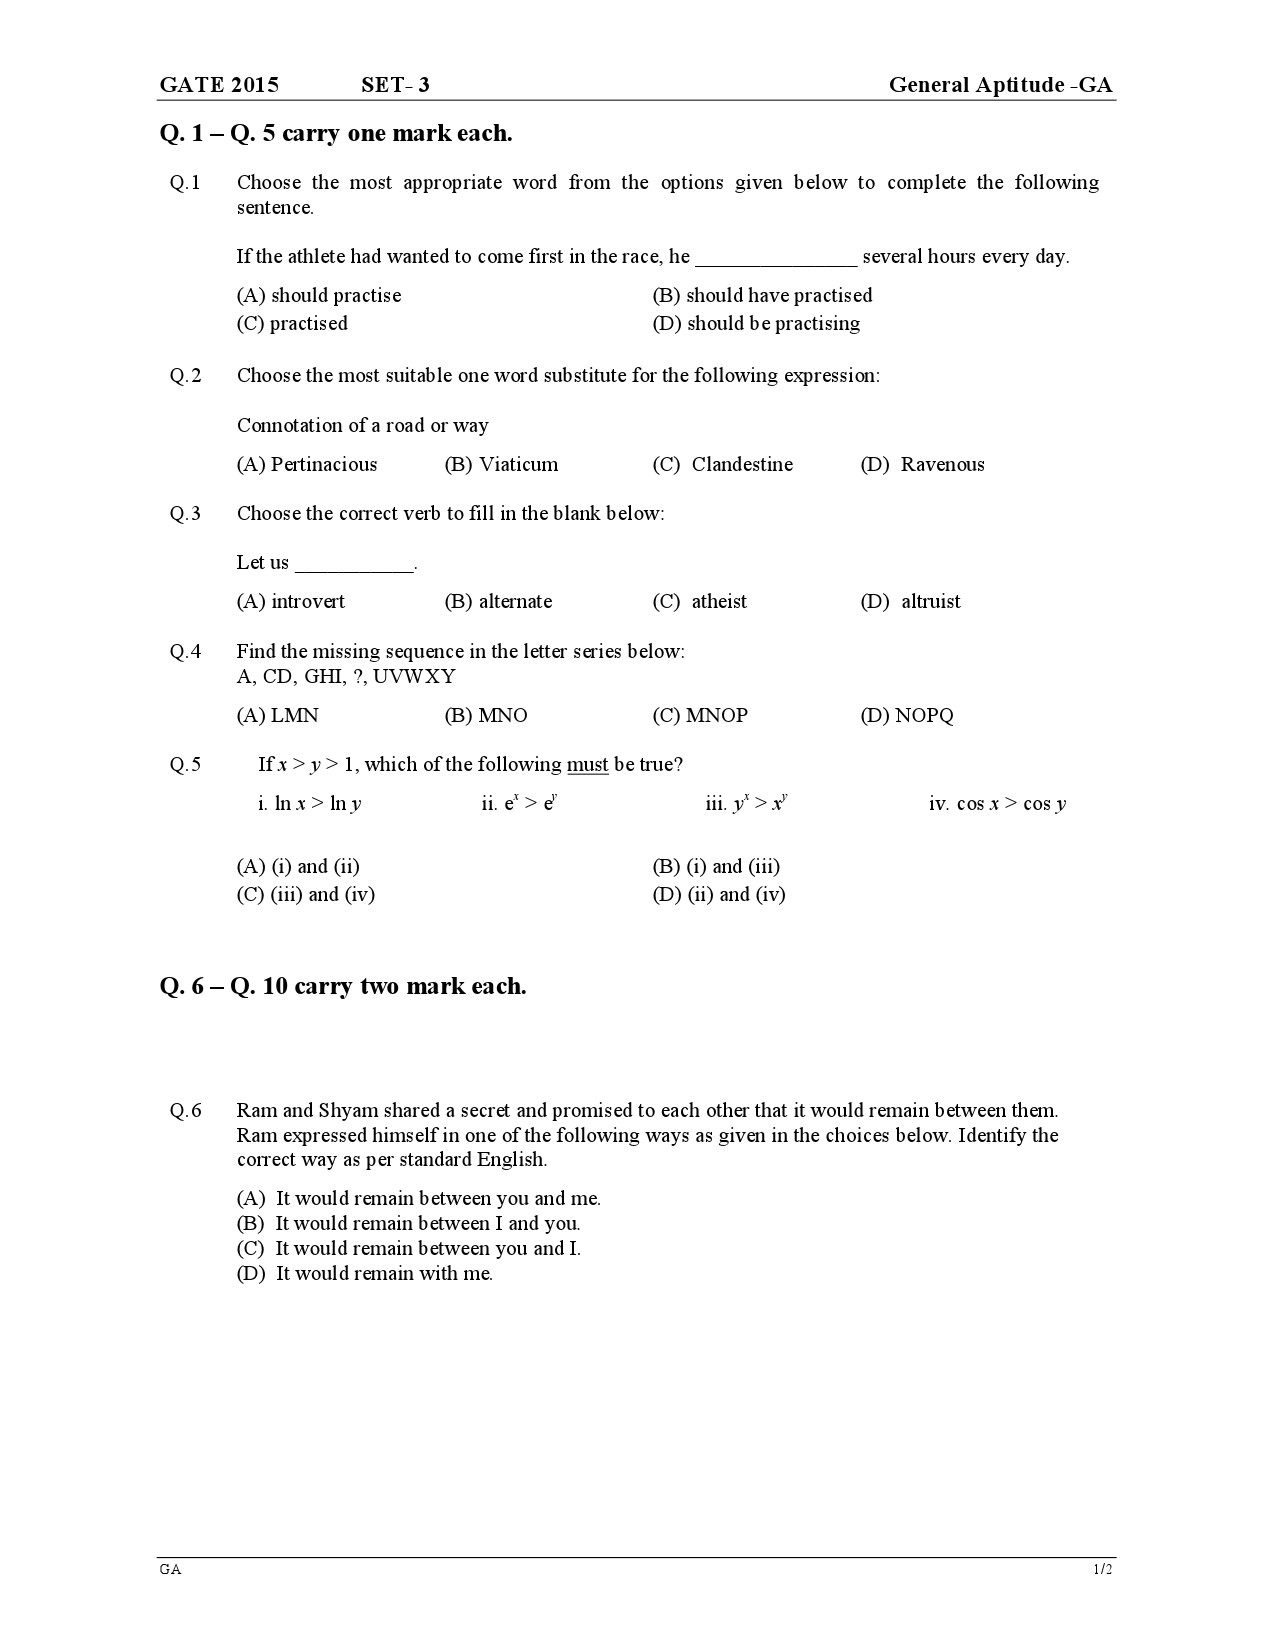 GATE Exam Question Paper 2015 General Aptitude 5